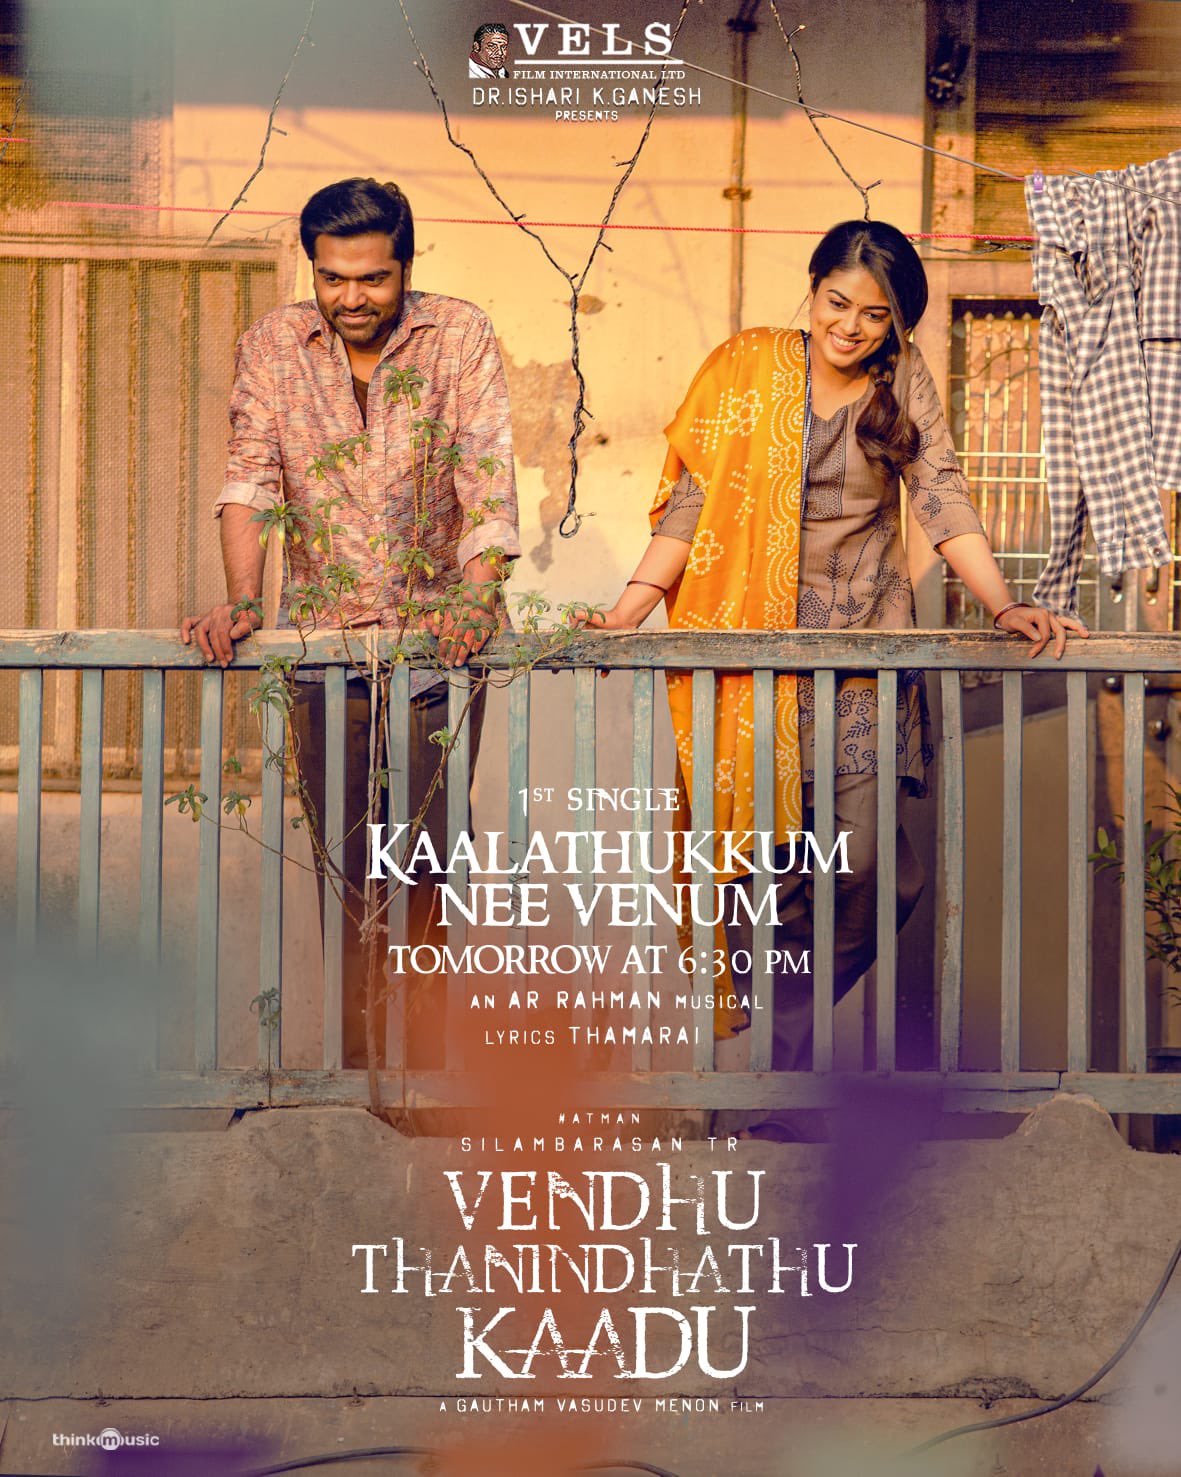 Vendhu thanindhathu kaadu first single release update